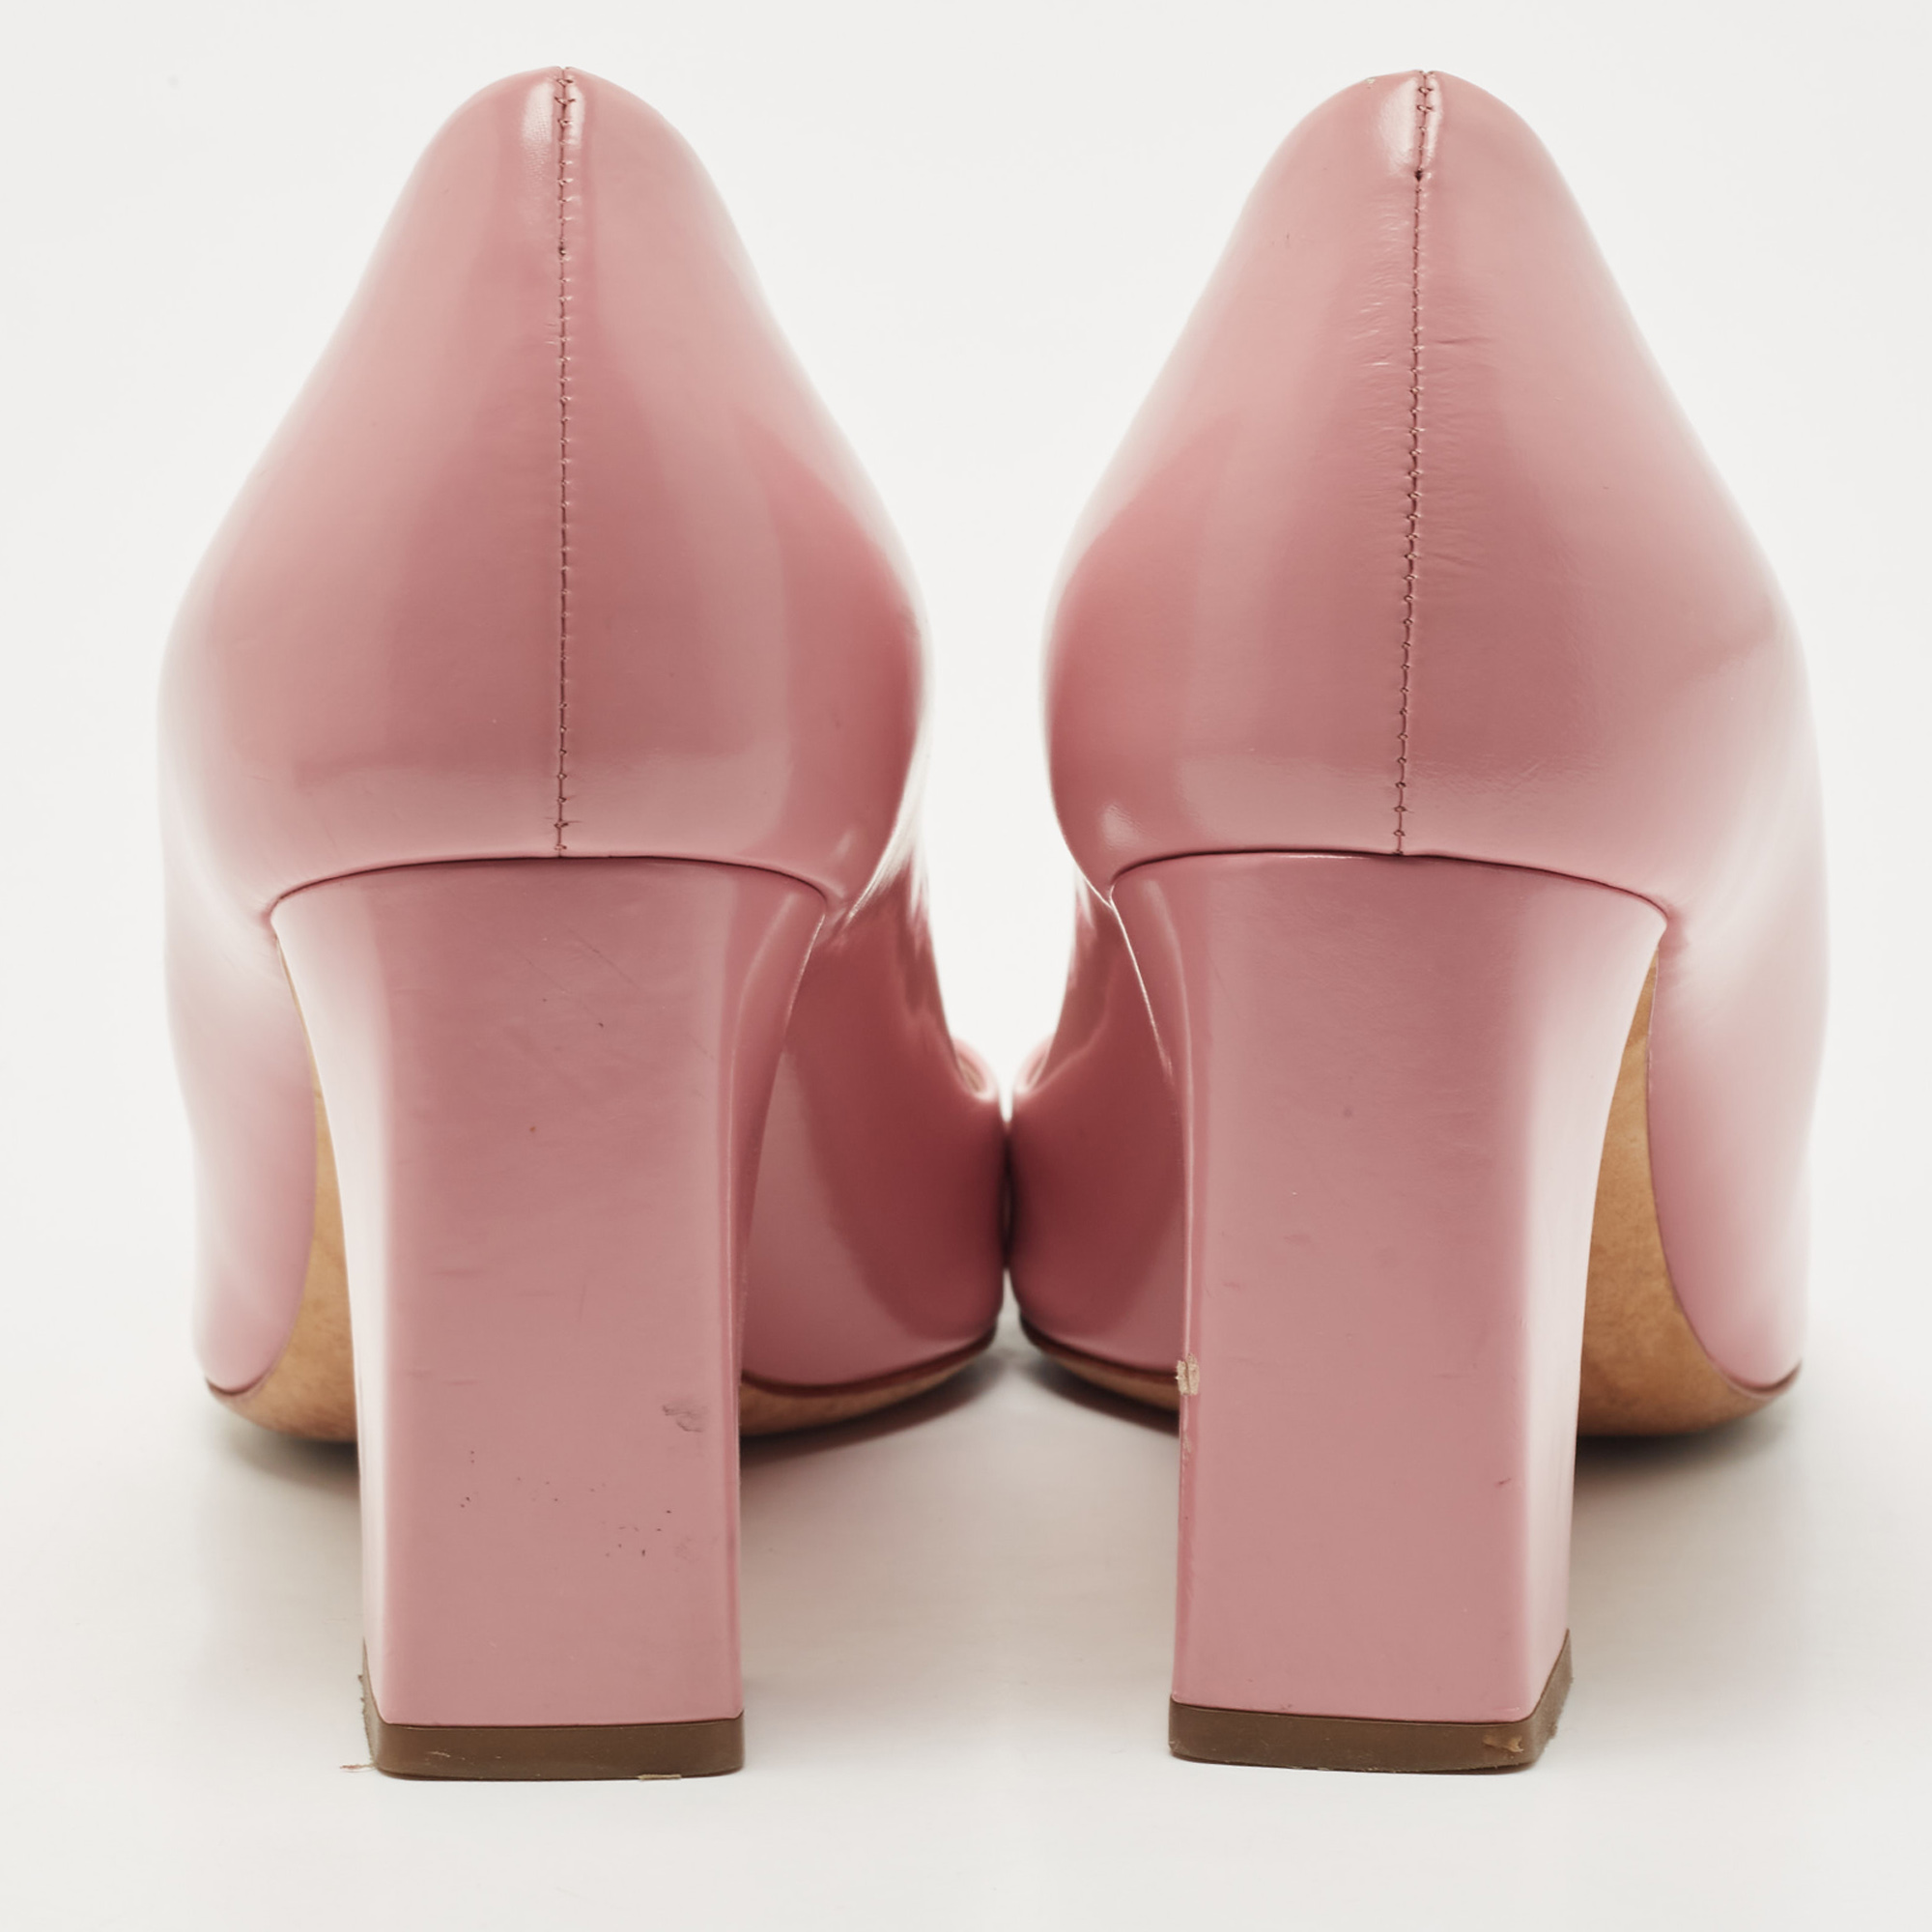 Dior Pink Leather Buckle Block Heel Pumps Size 37.5